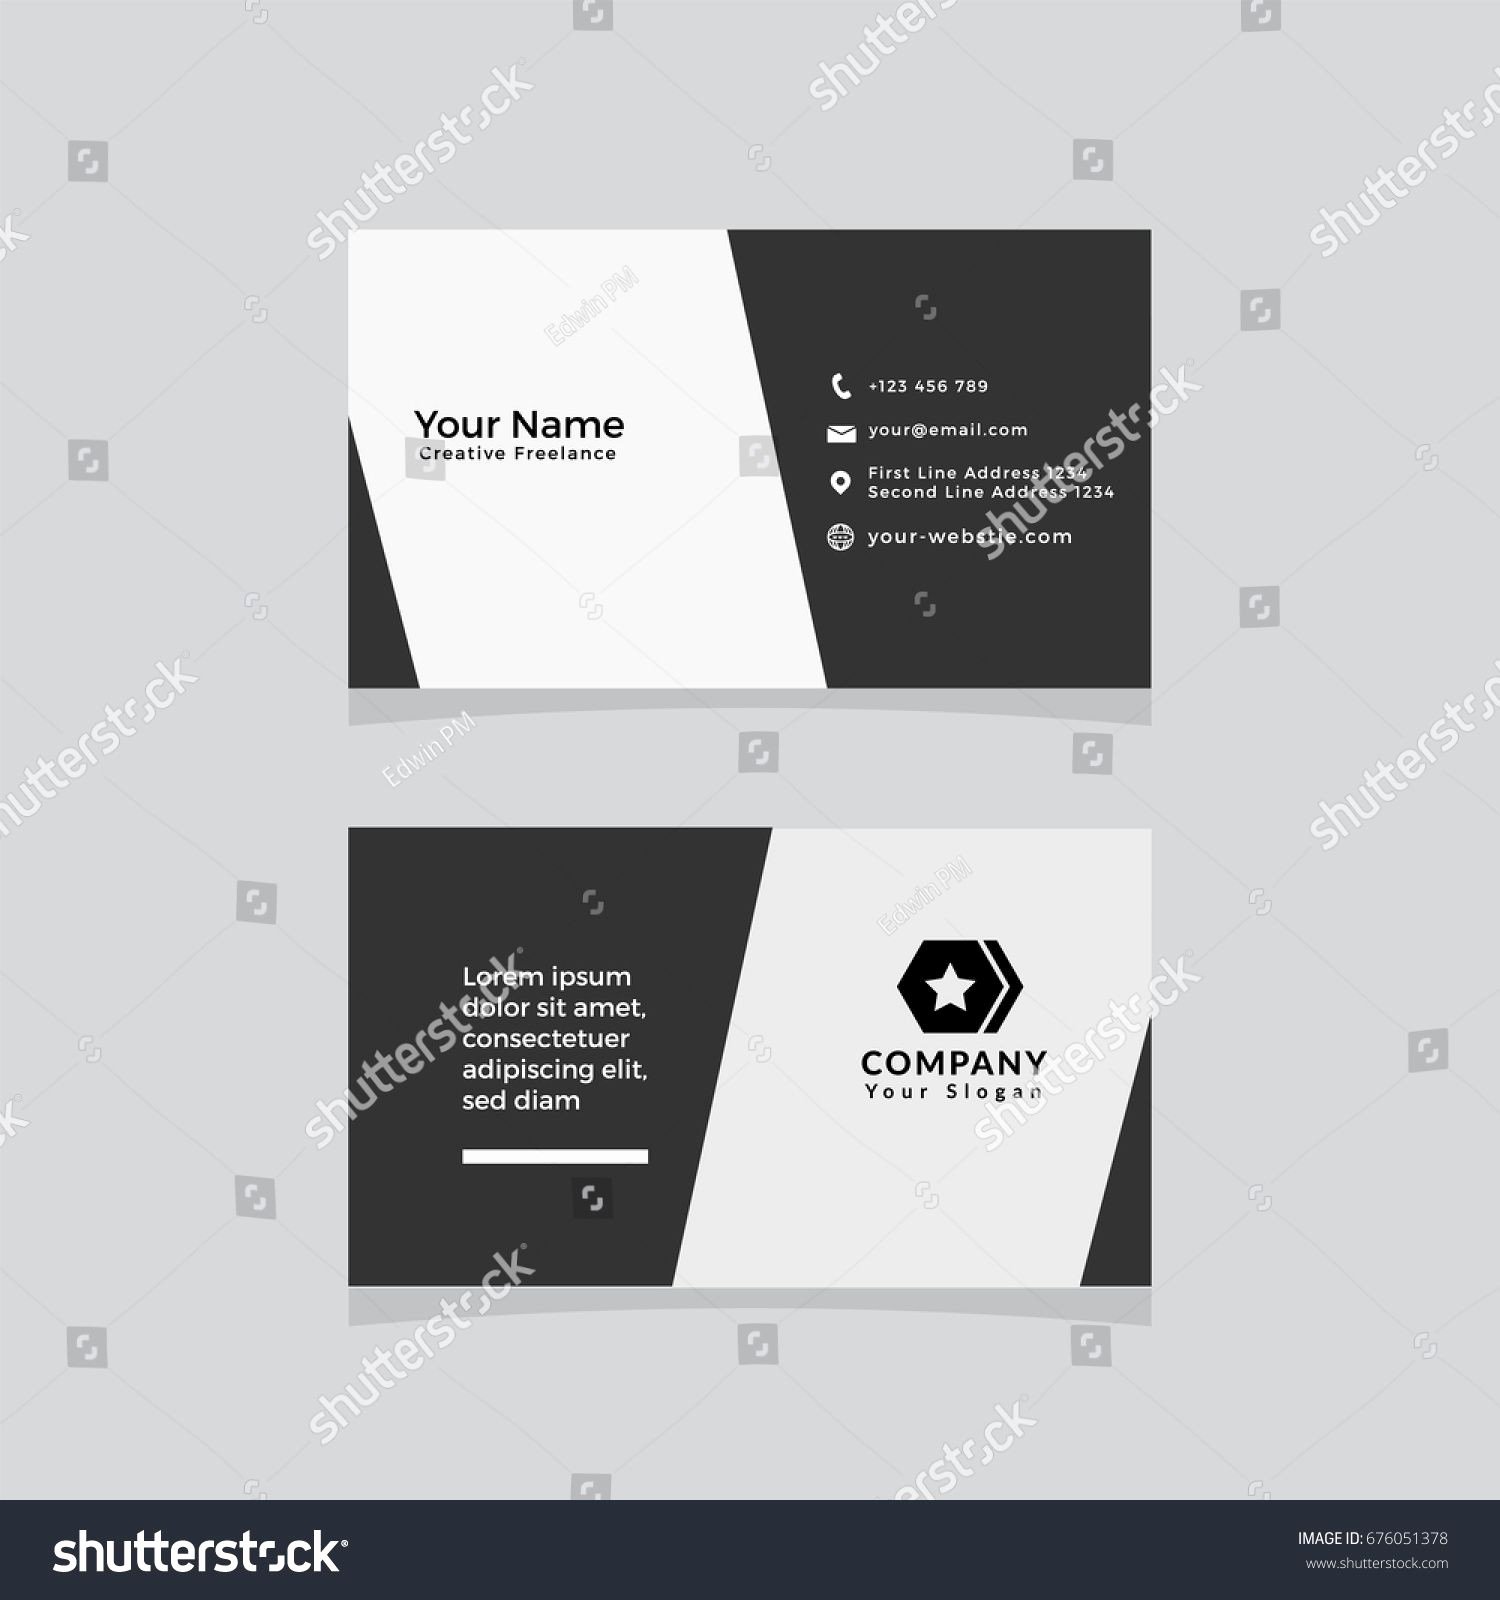 Vertical Business Card Template Illustrator Elegant Double